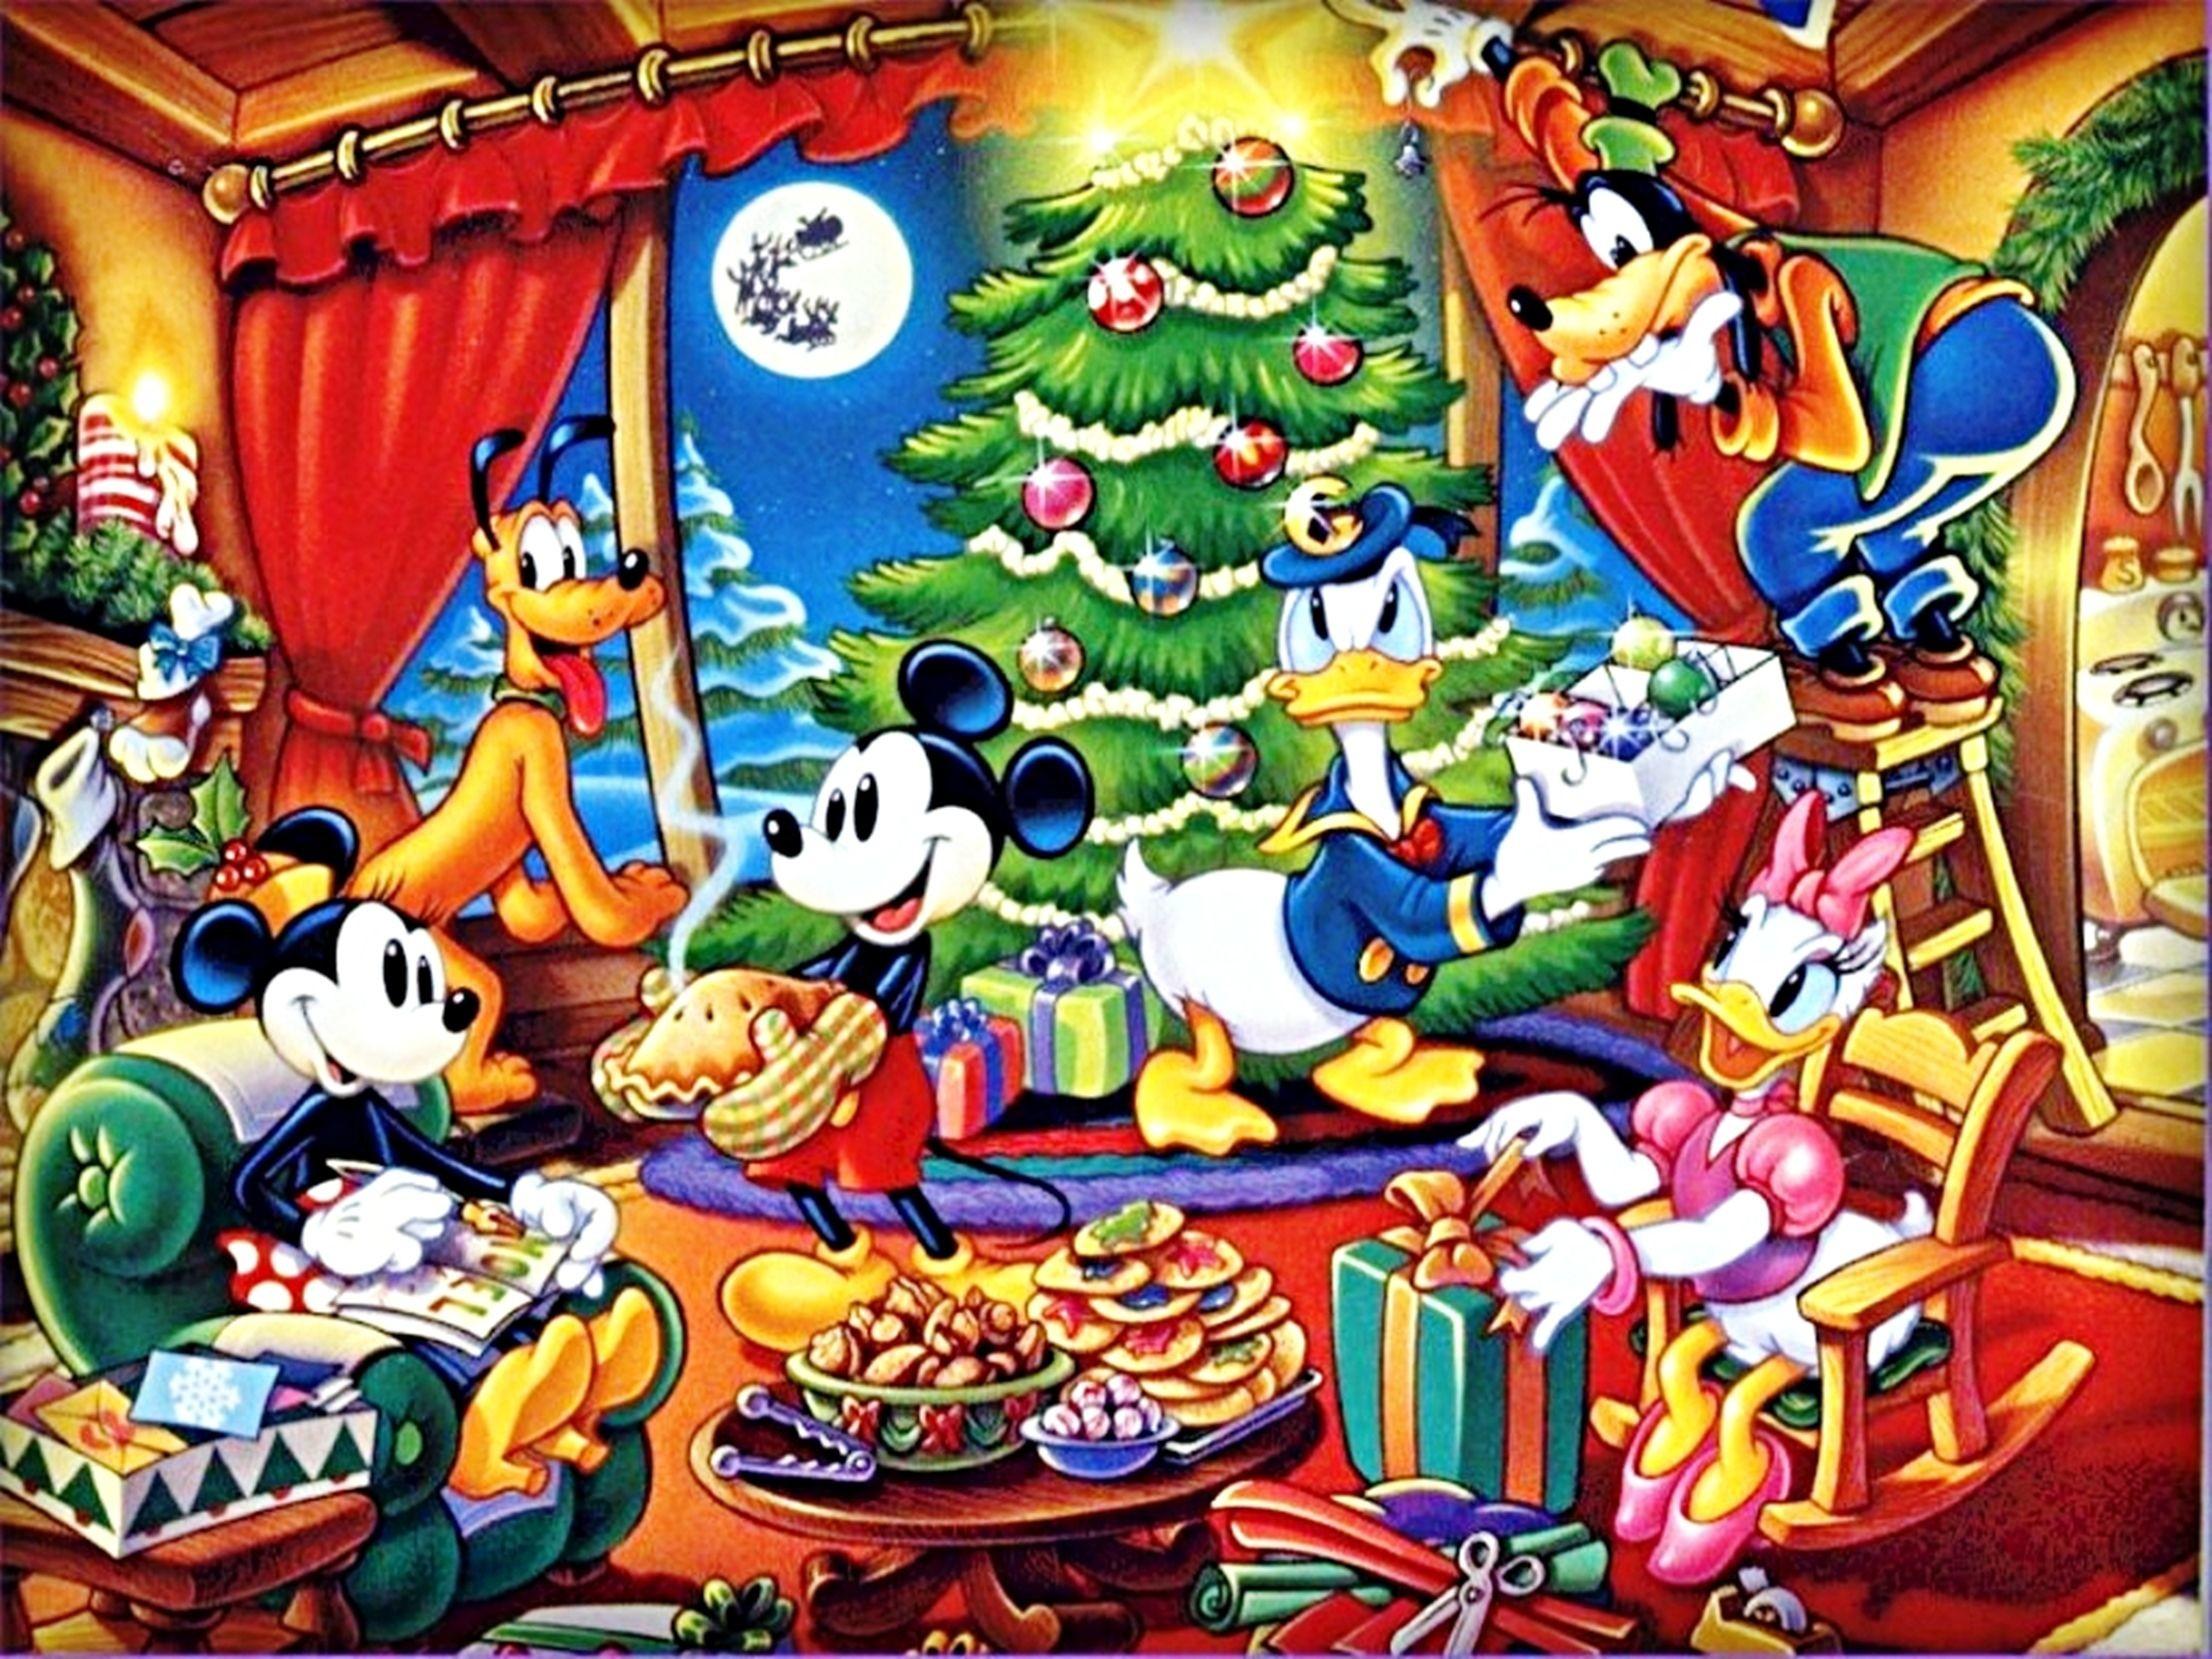 Mickey Christmas Wallpaper